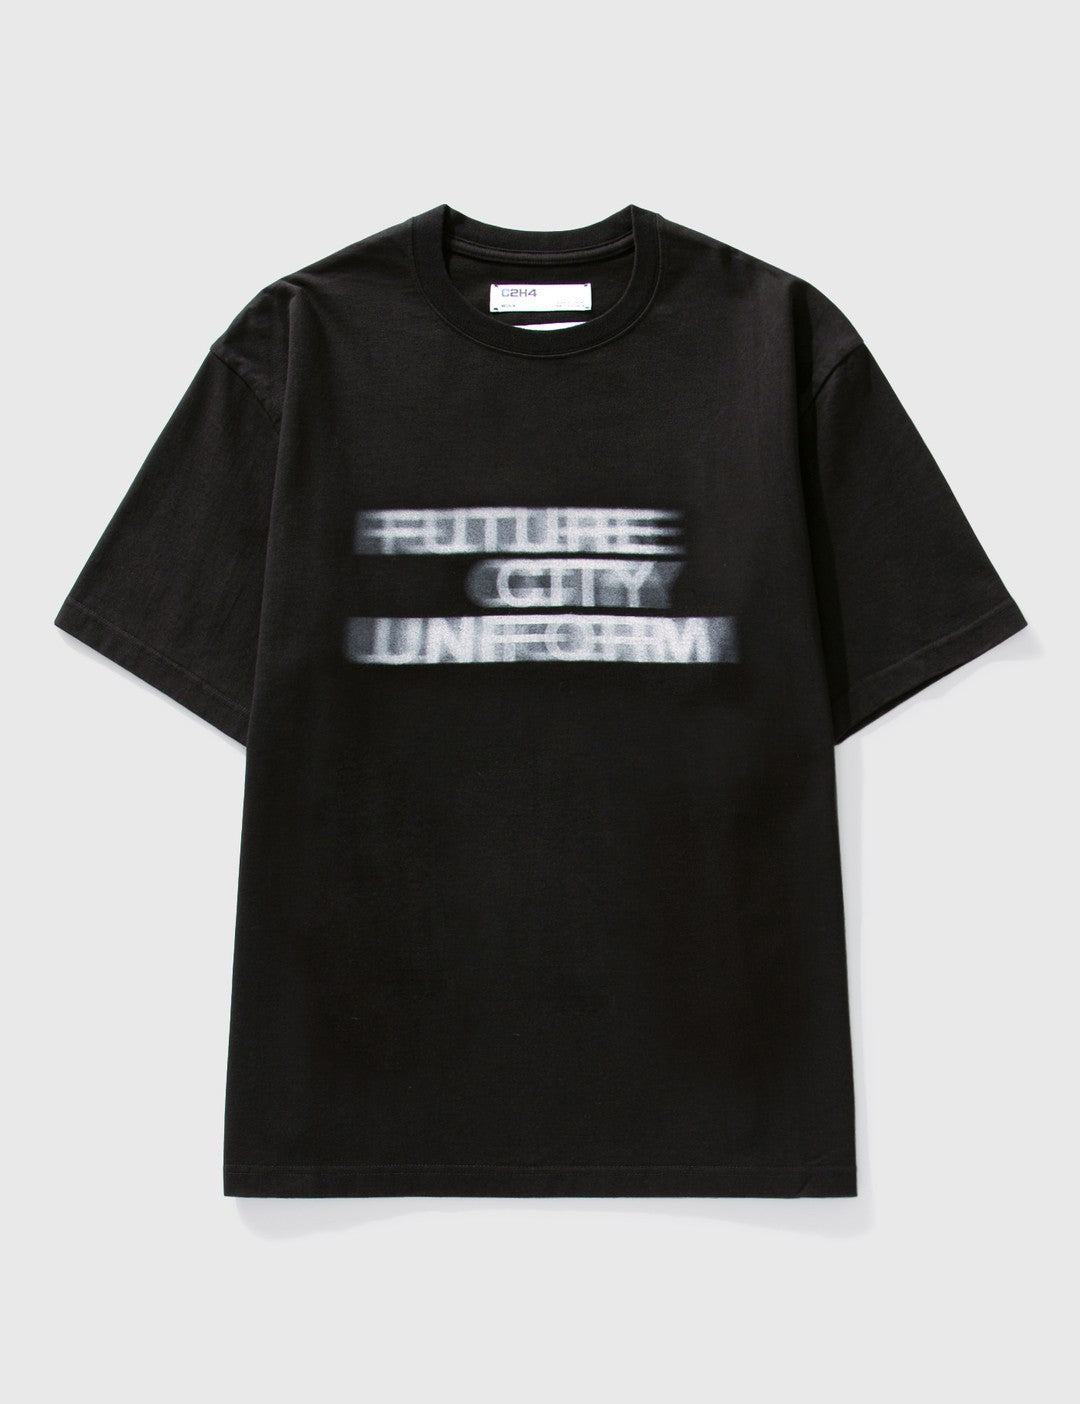 Future City Uniform T-Shirt - Black